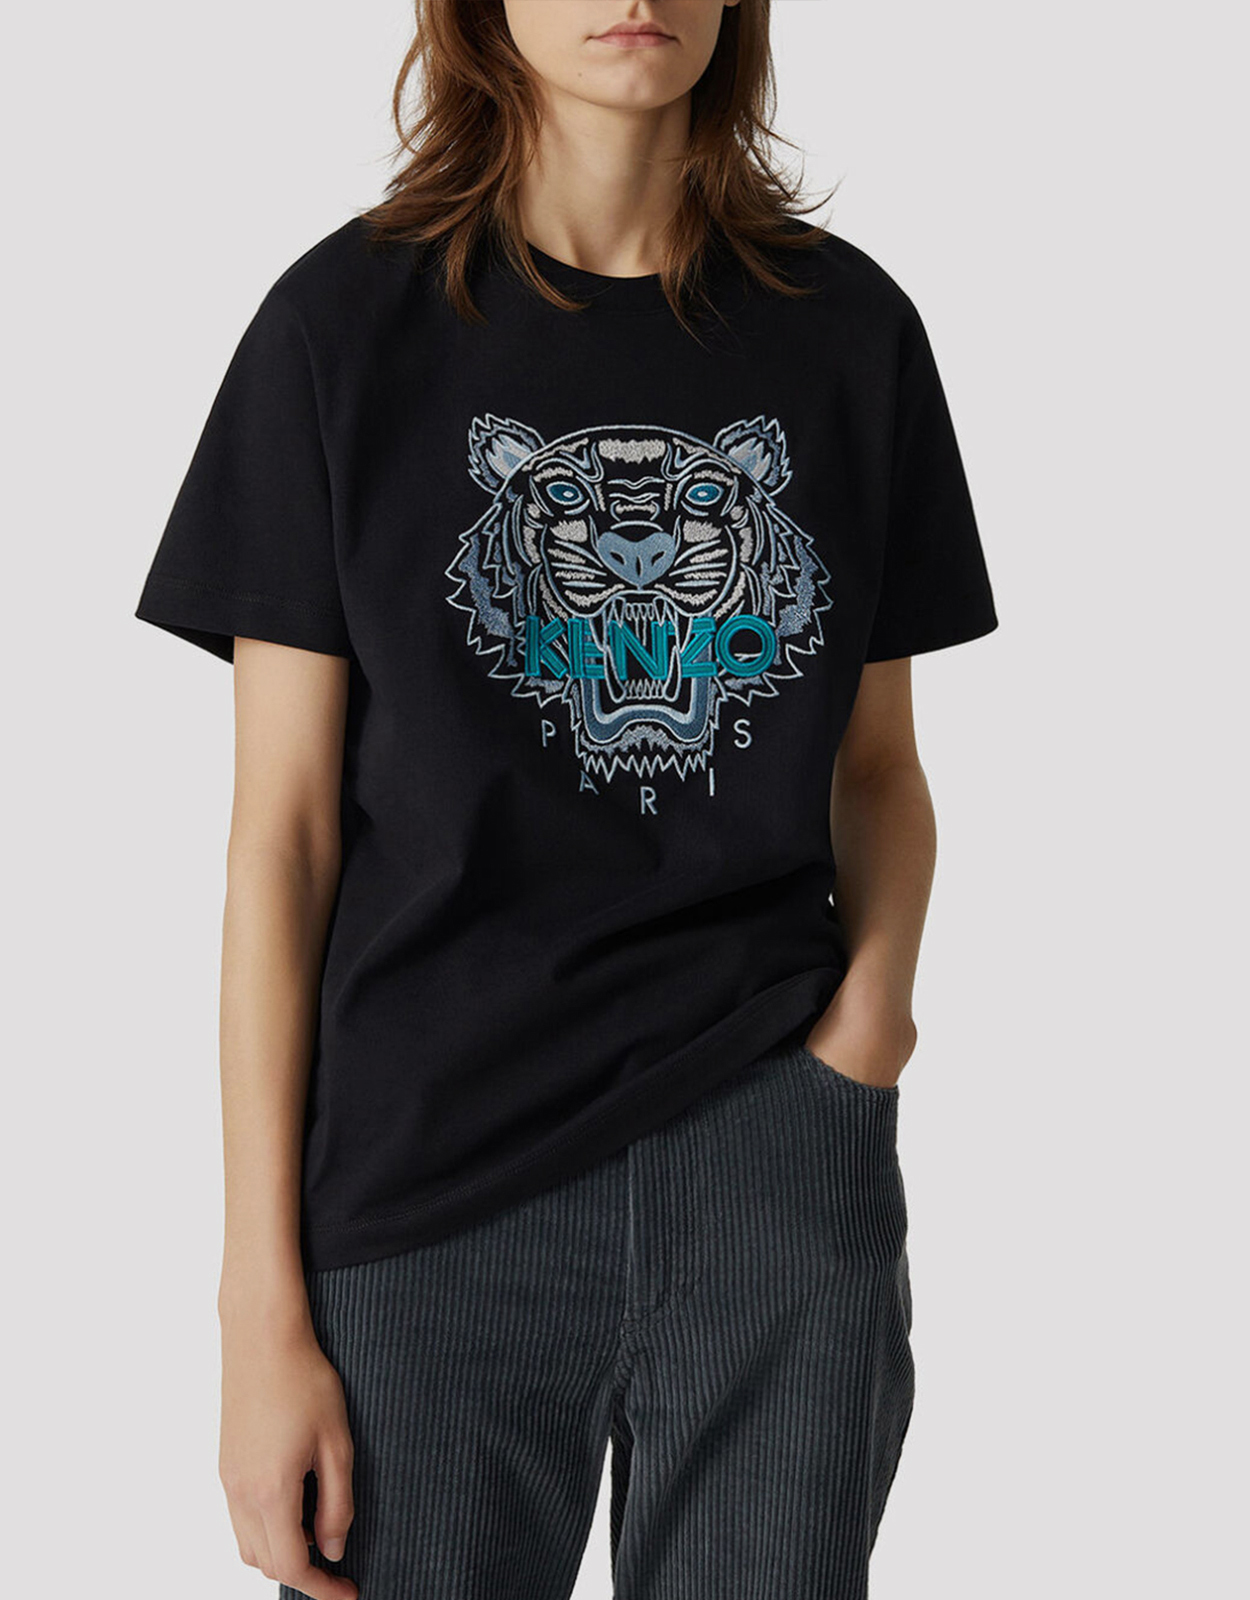 Kenzo Tiger T-shirt (Tops,T-shirts) IFCHIC.COM